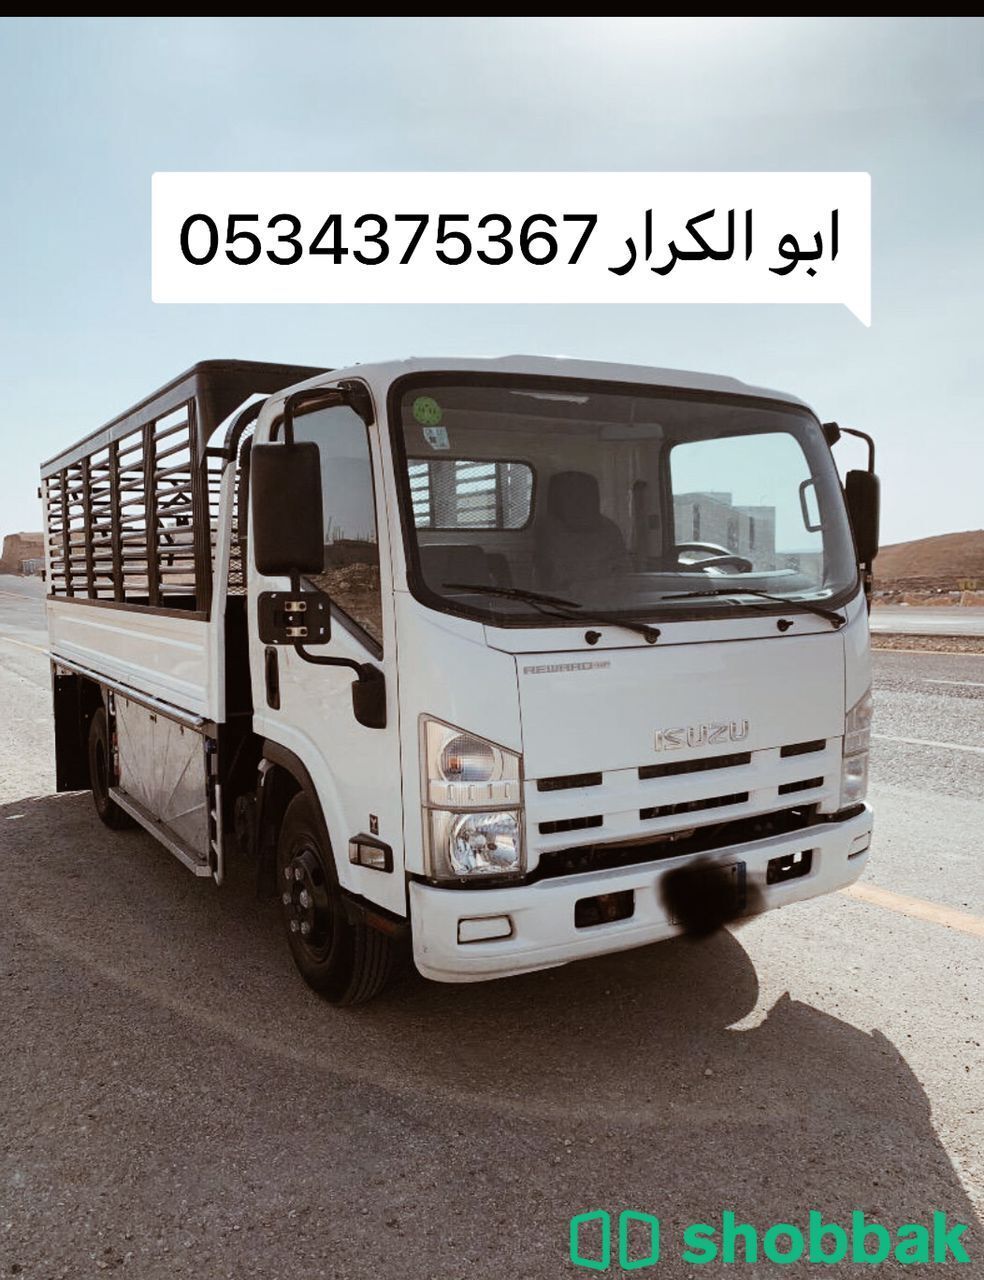 دينا نقل عفش بالرياض 0534375367  Shobbak Saudi Arabia